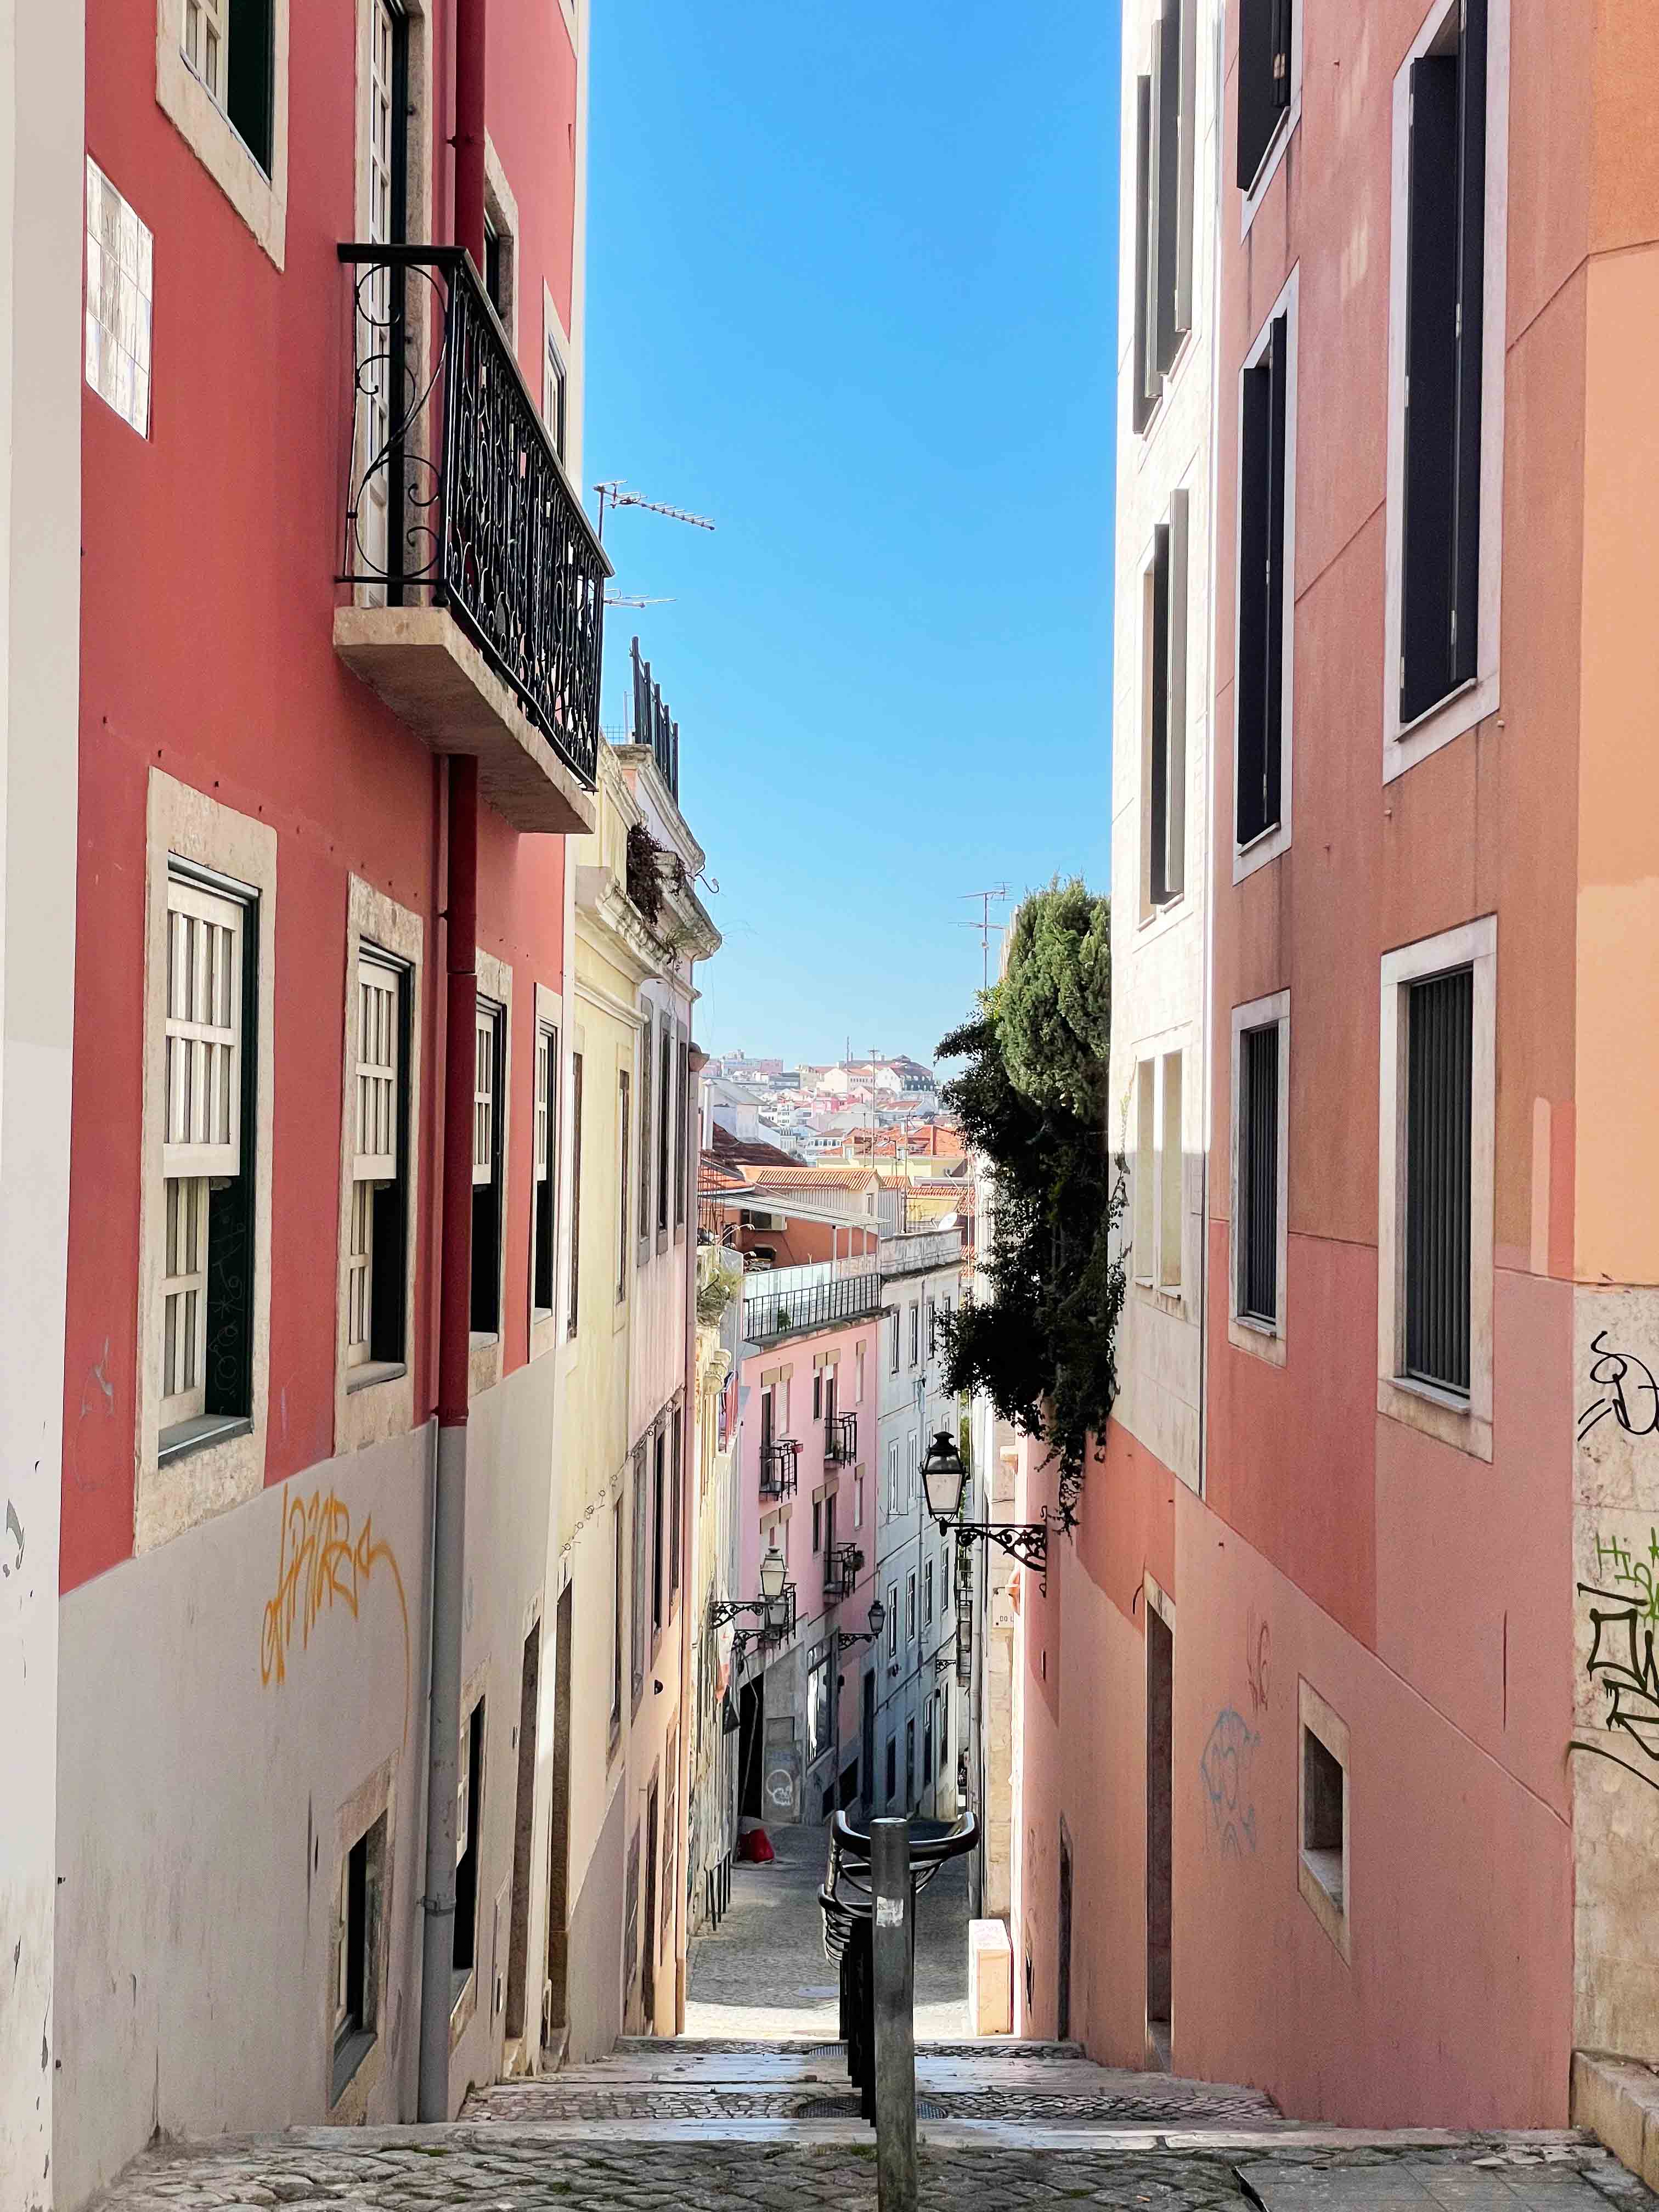 The narrow streets of Lisbon, Portugal.